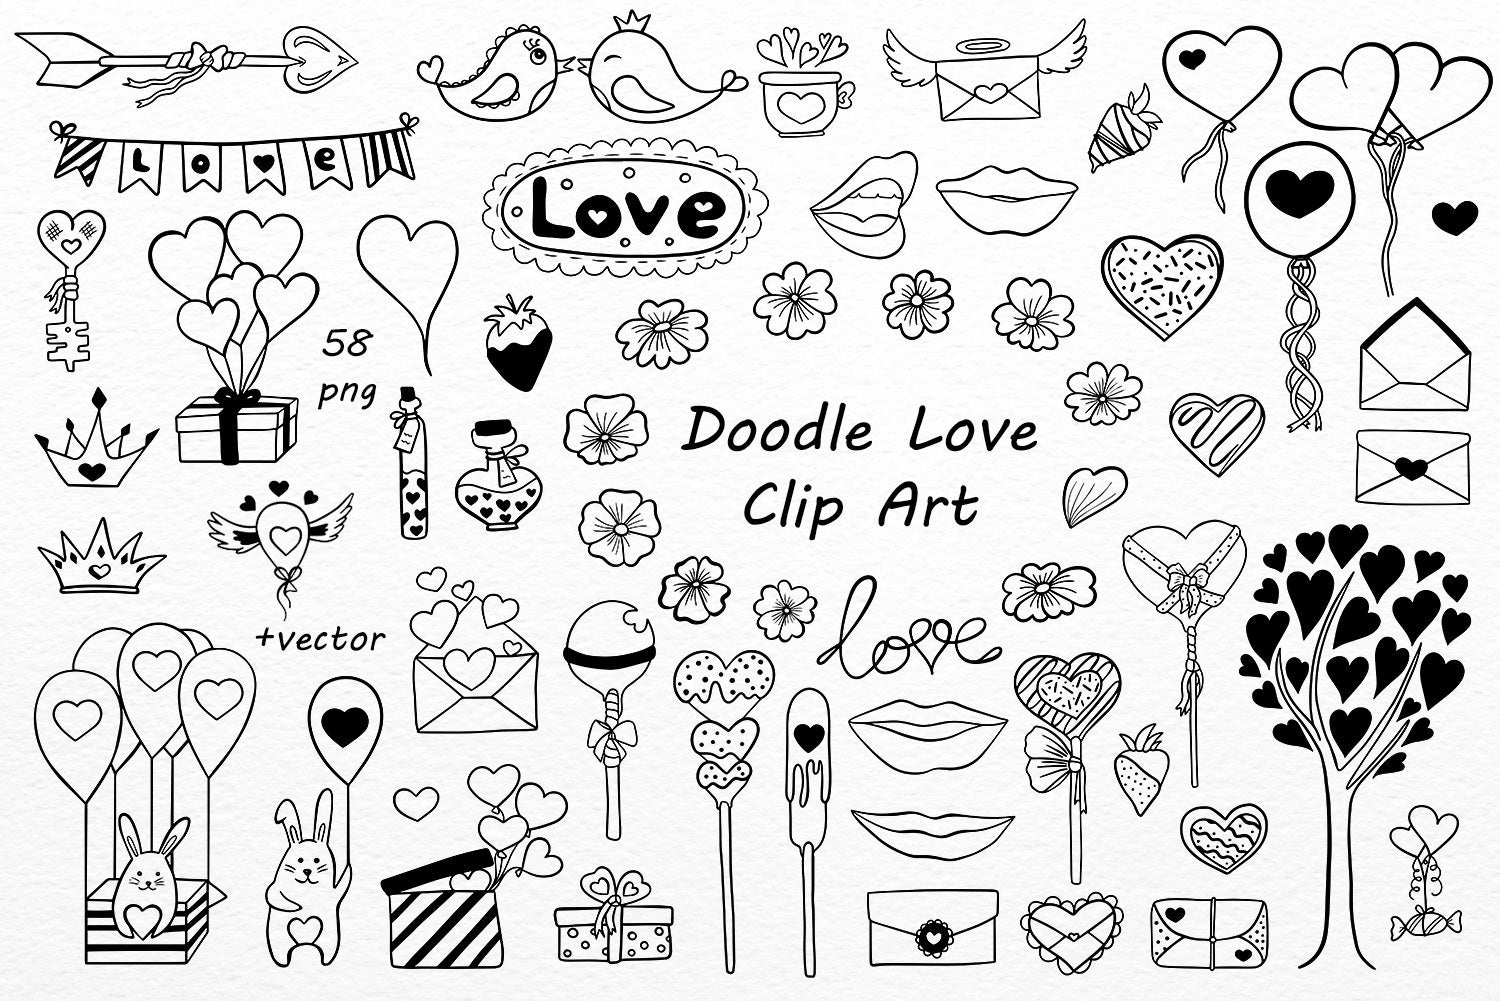 Desenho fácil e rapido  Cute heart drawings, Cute easy doodles, Mini  drawings